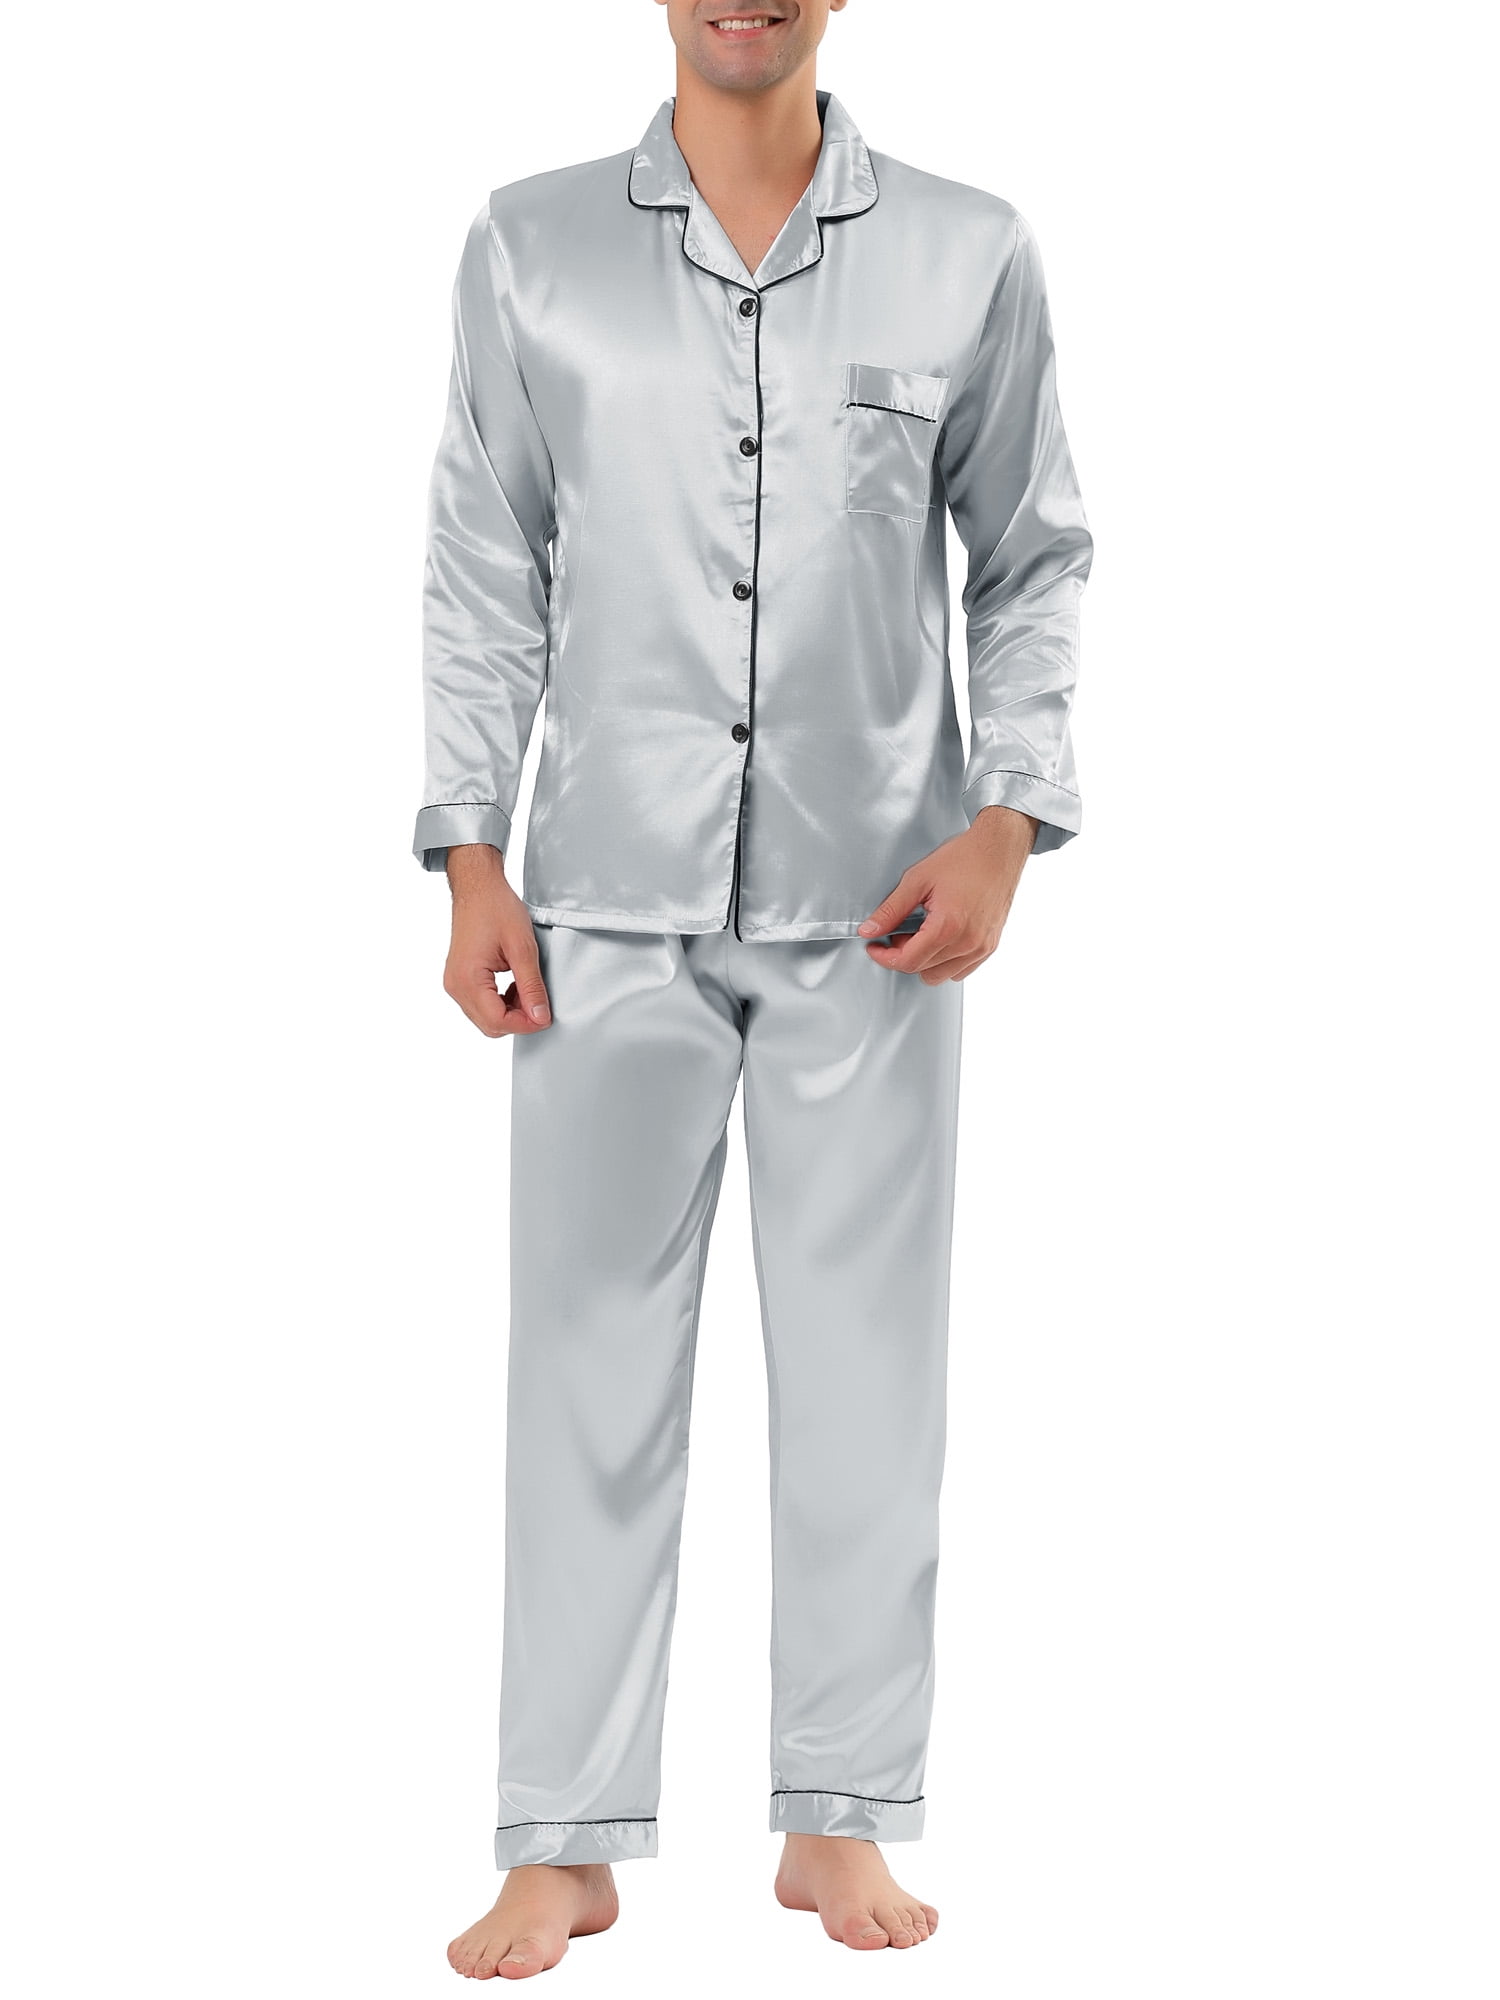 Details about   Men's Satin Pajamas Long Button-Down Pj Set Sleepwear Loungewear 